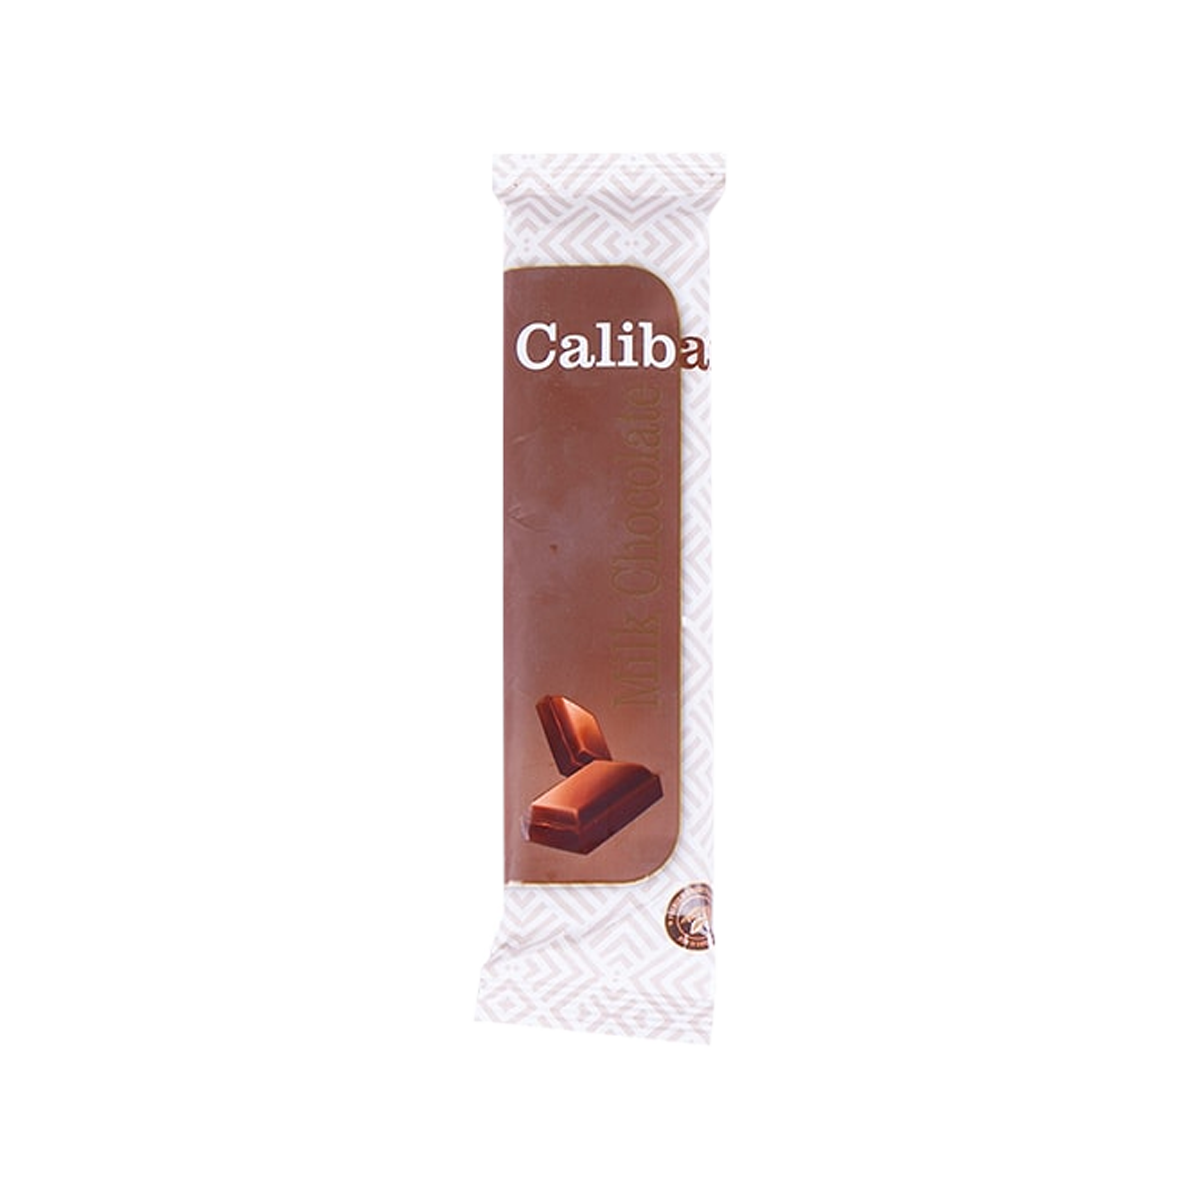 Calibar Milk Chocolate 46g